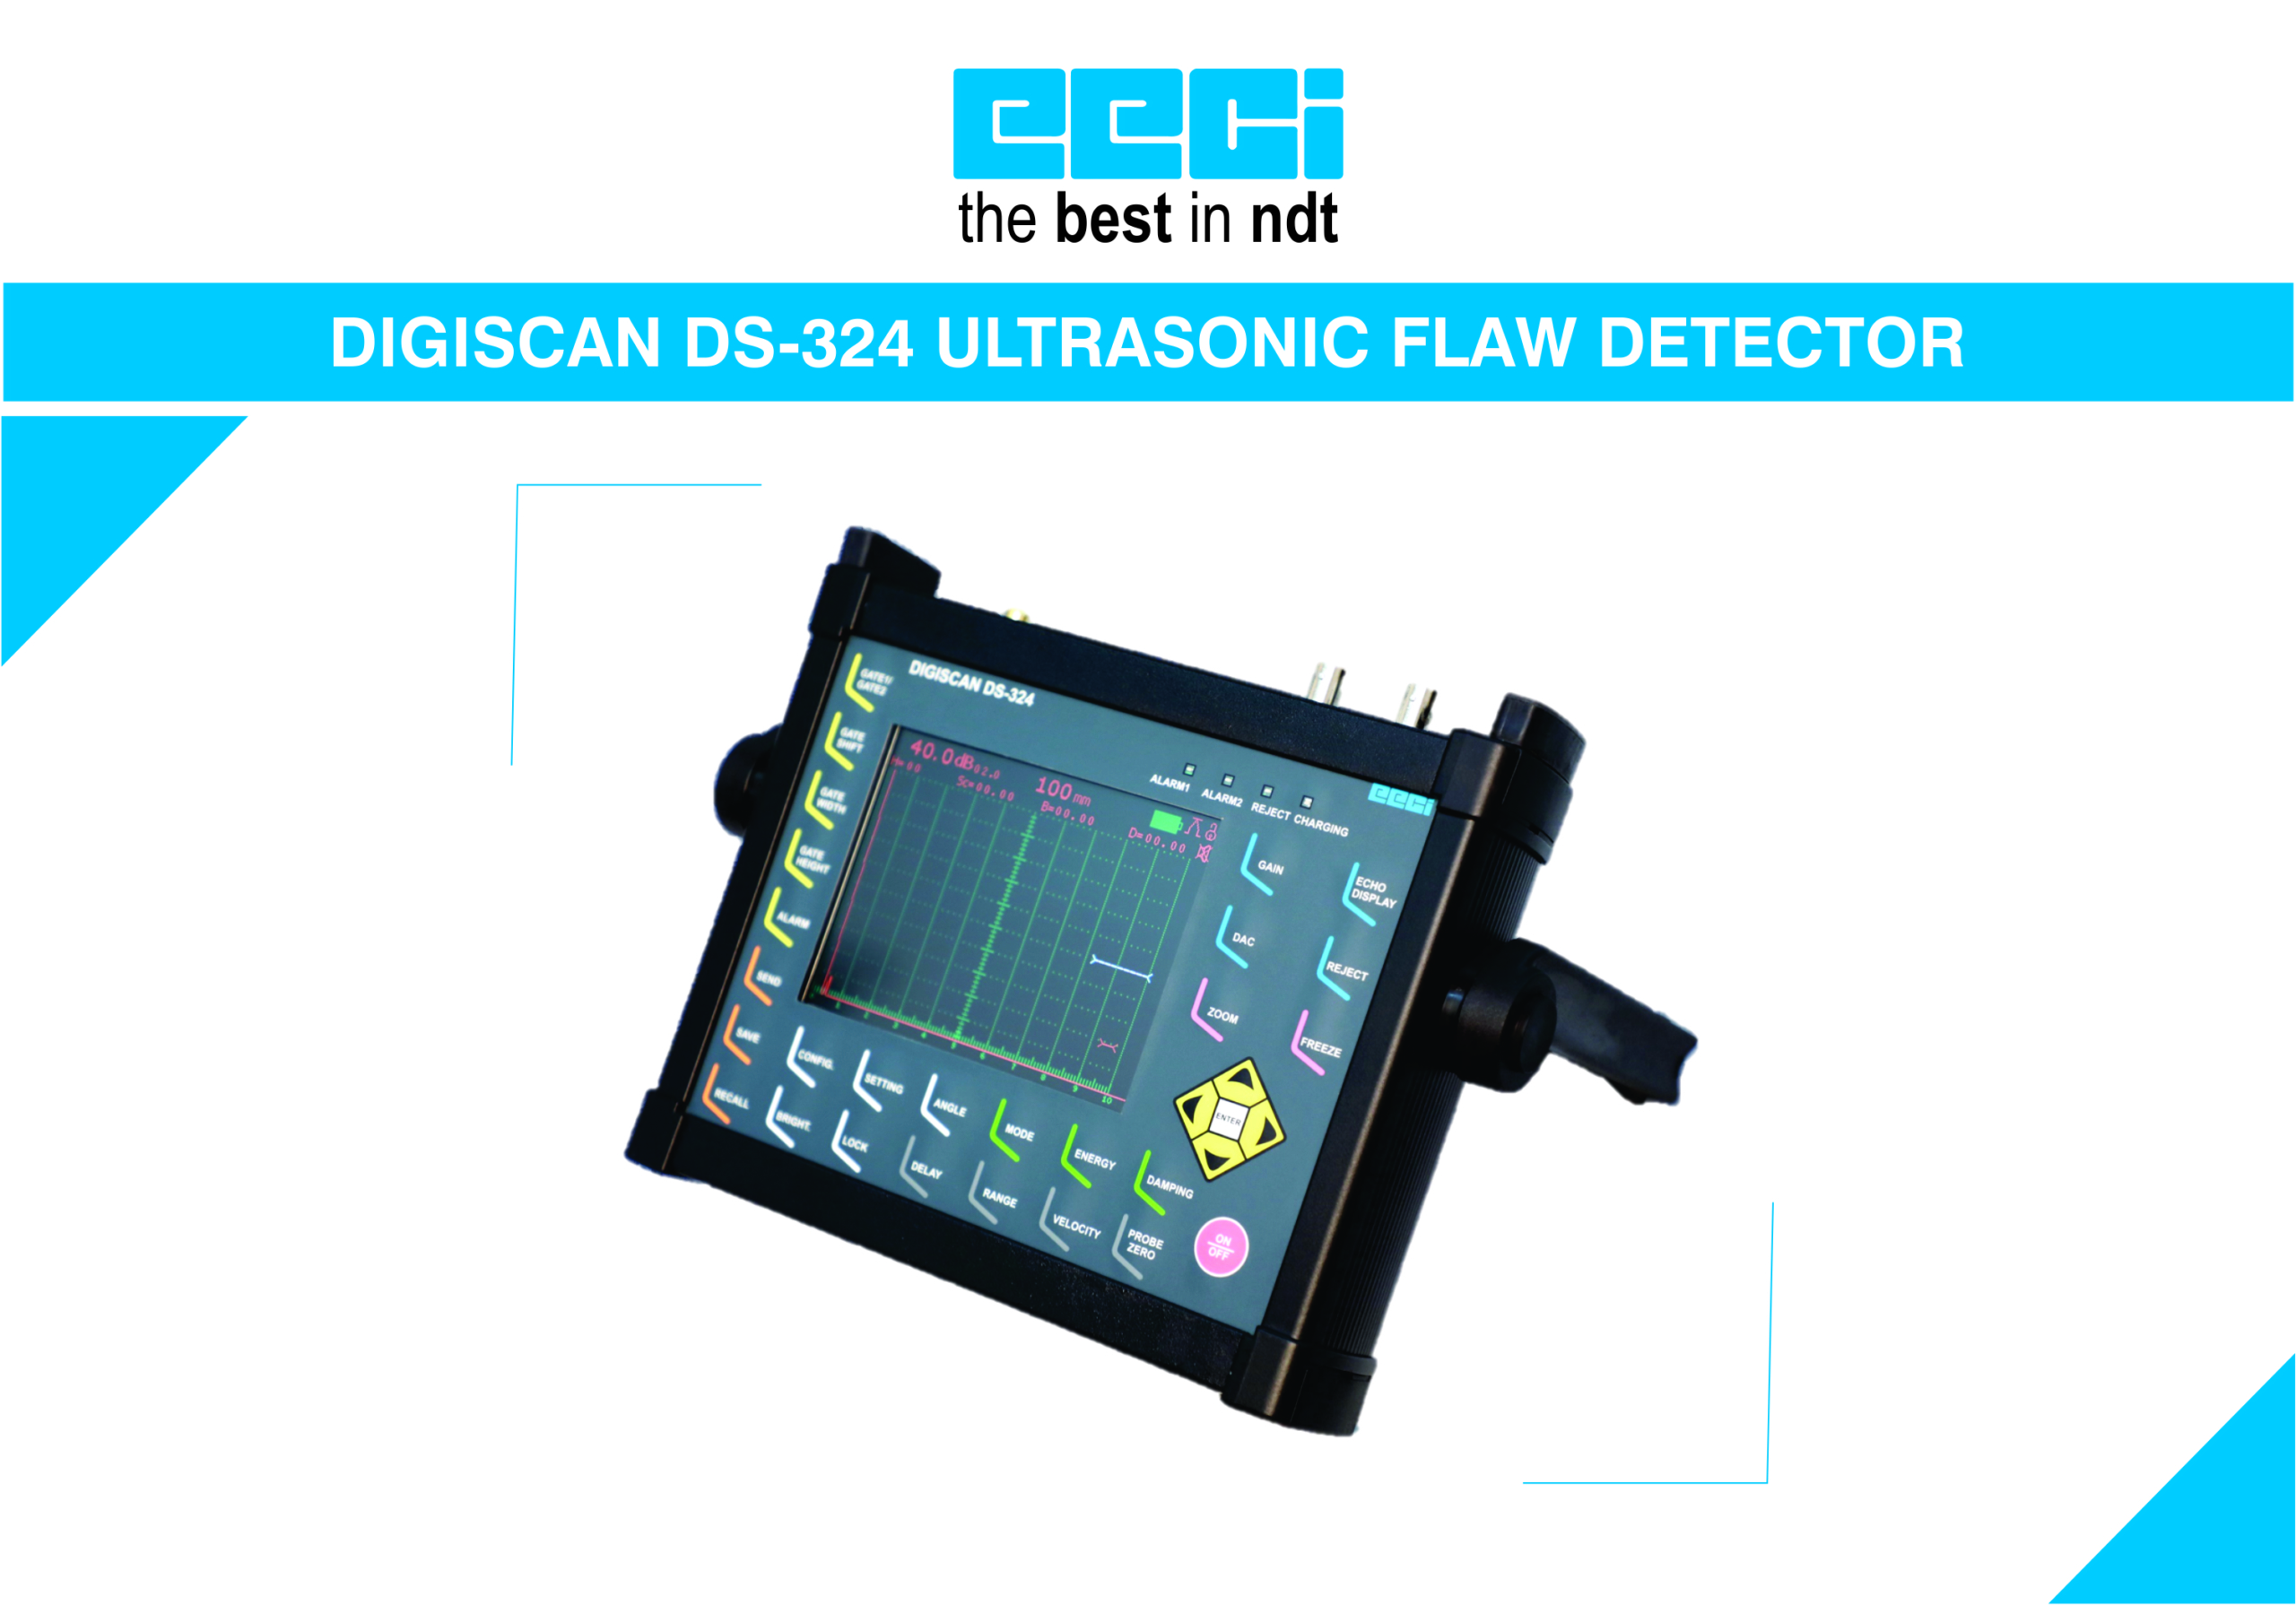 DIGISCAN DS-324 – ULTRASONIC FLAW DETECTOR